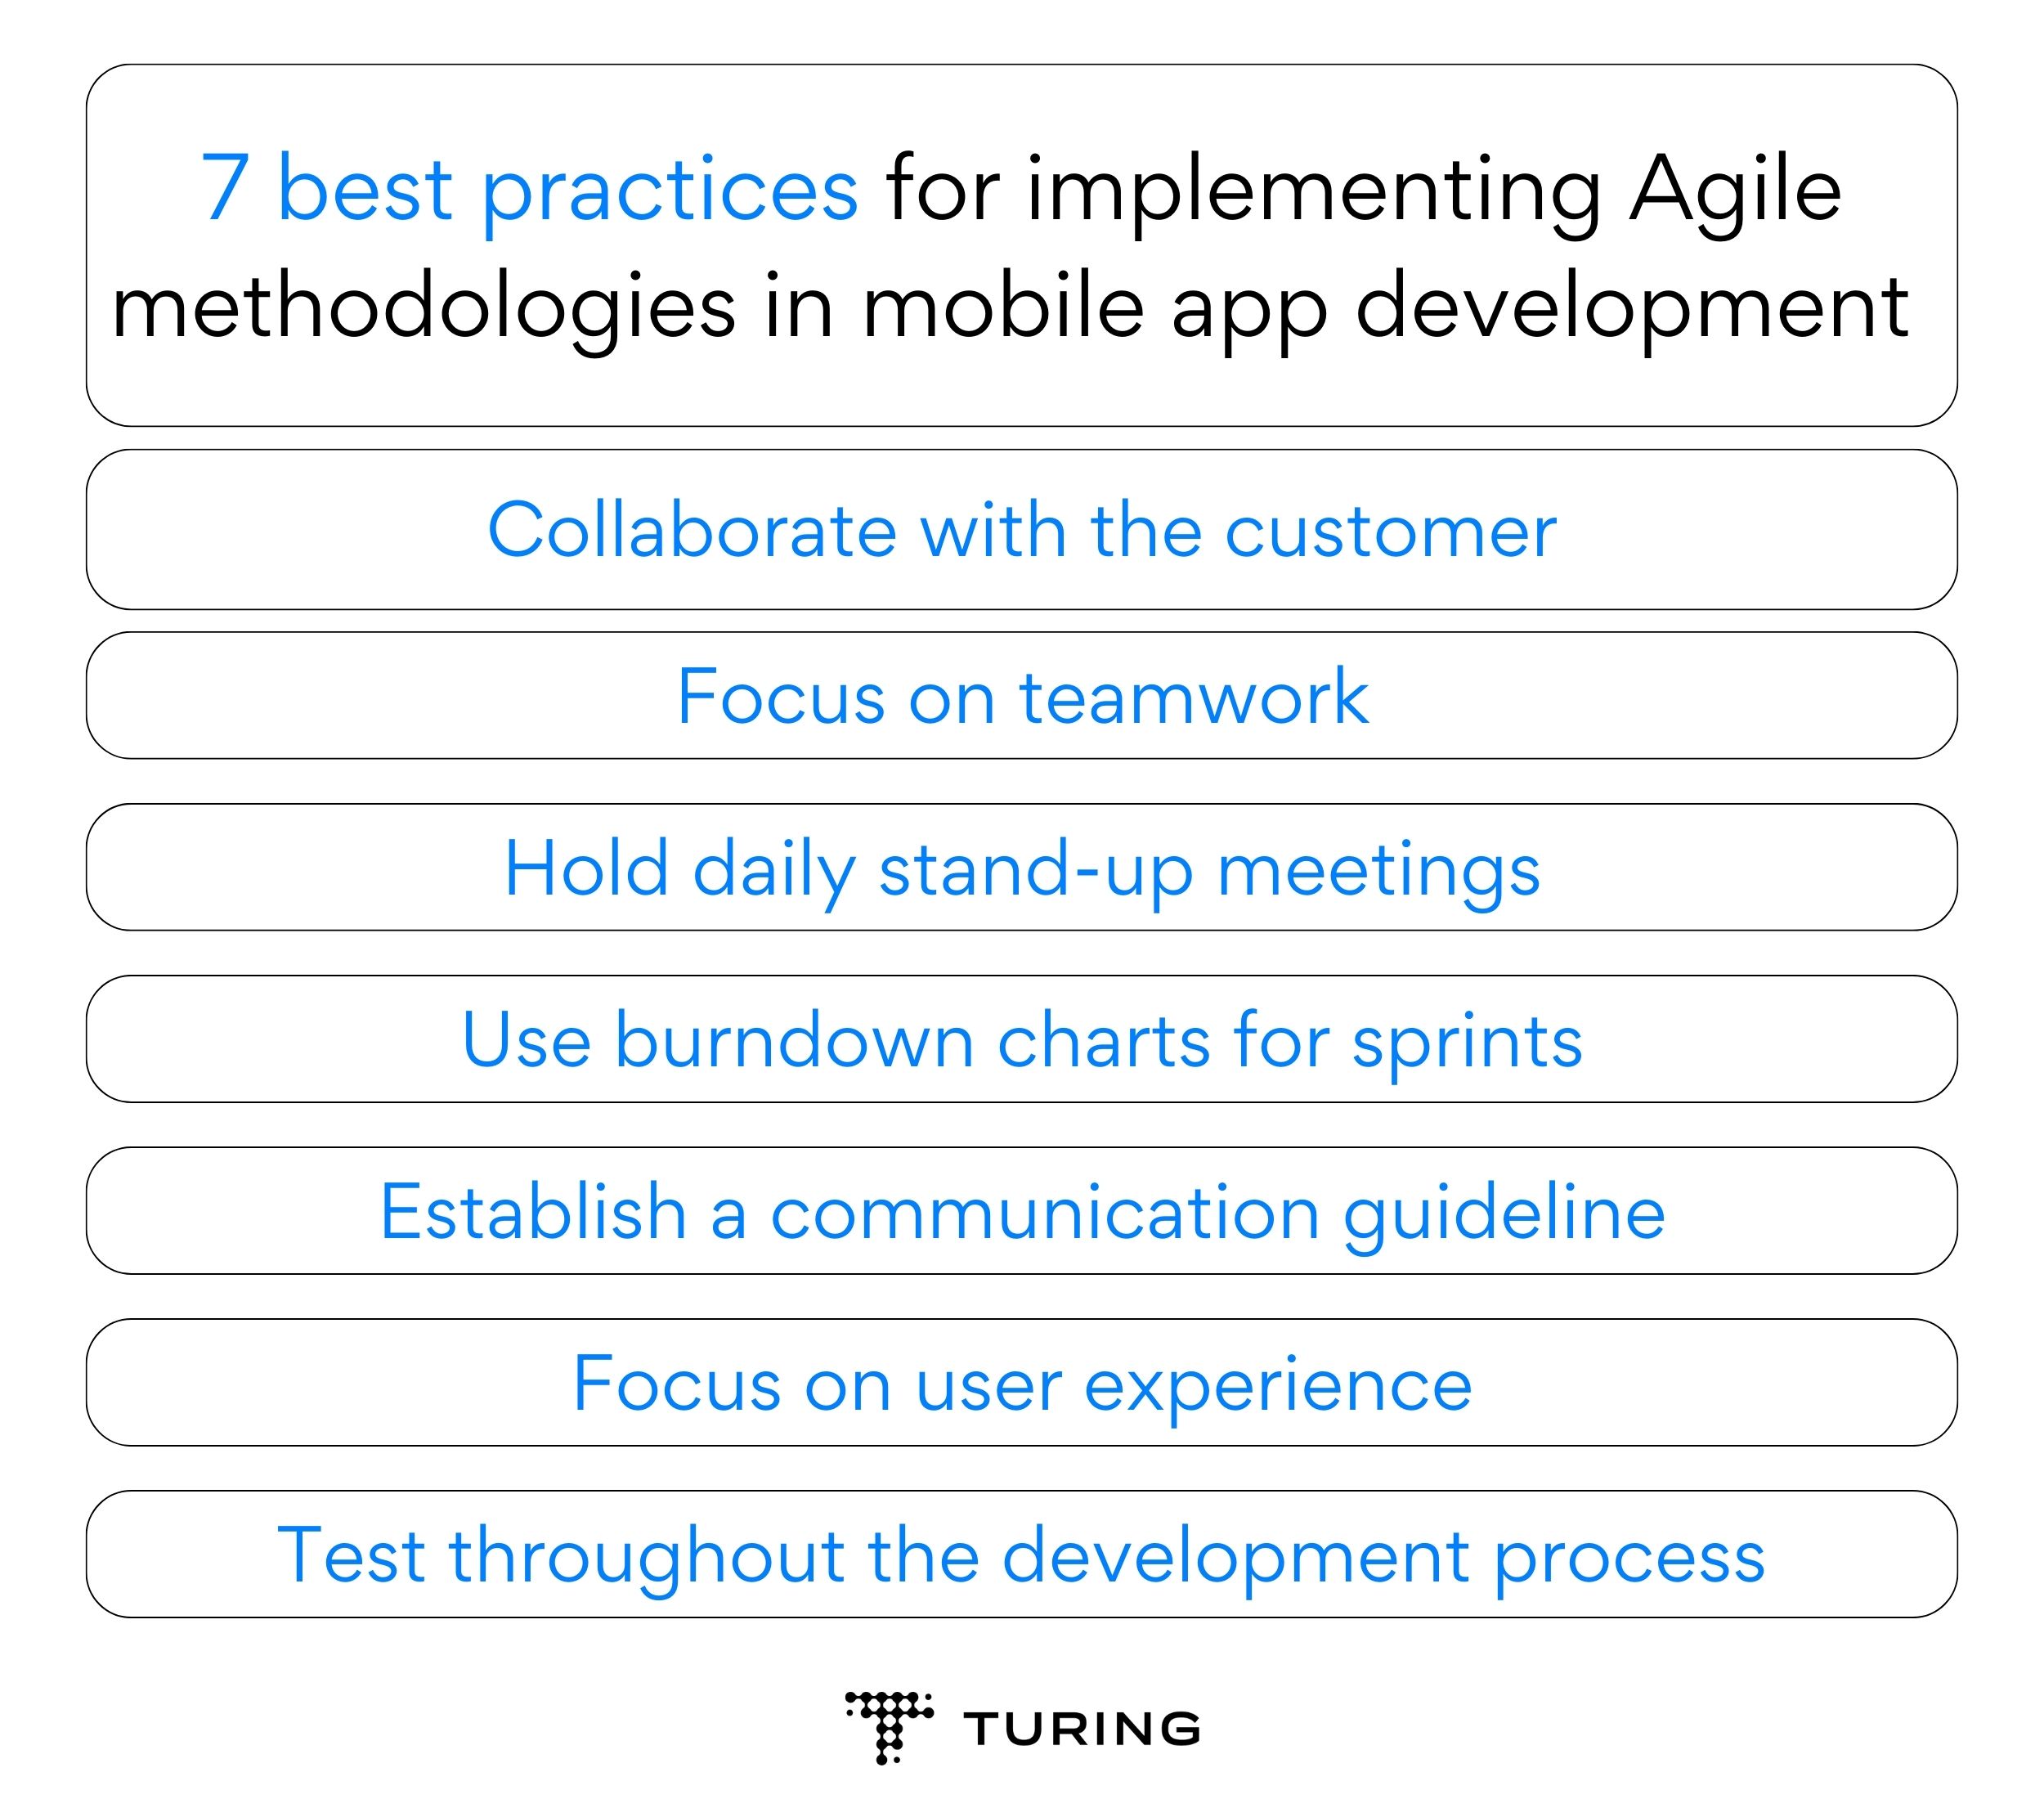 7 Best practices for implementing Agile methodologies in mobile app development